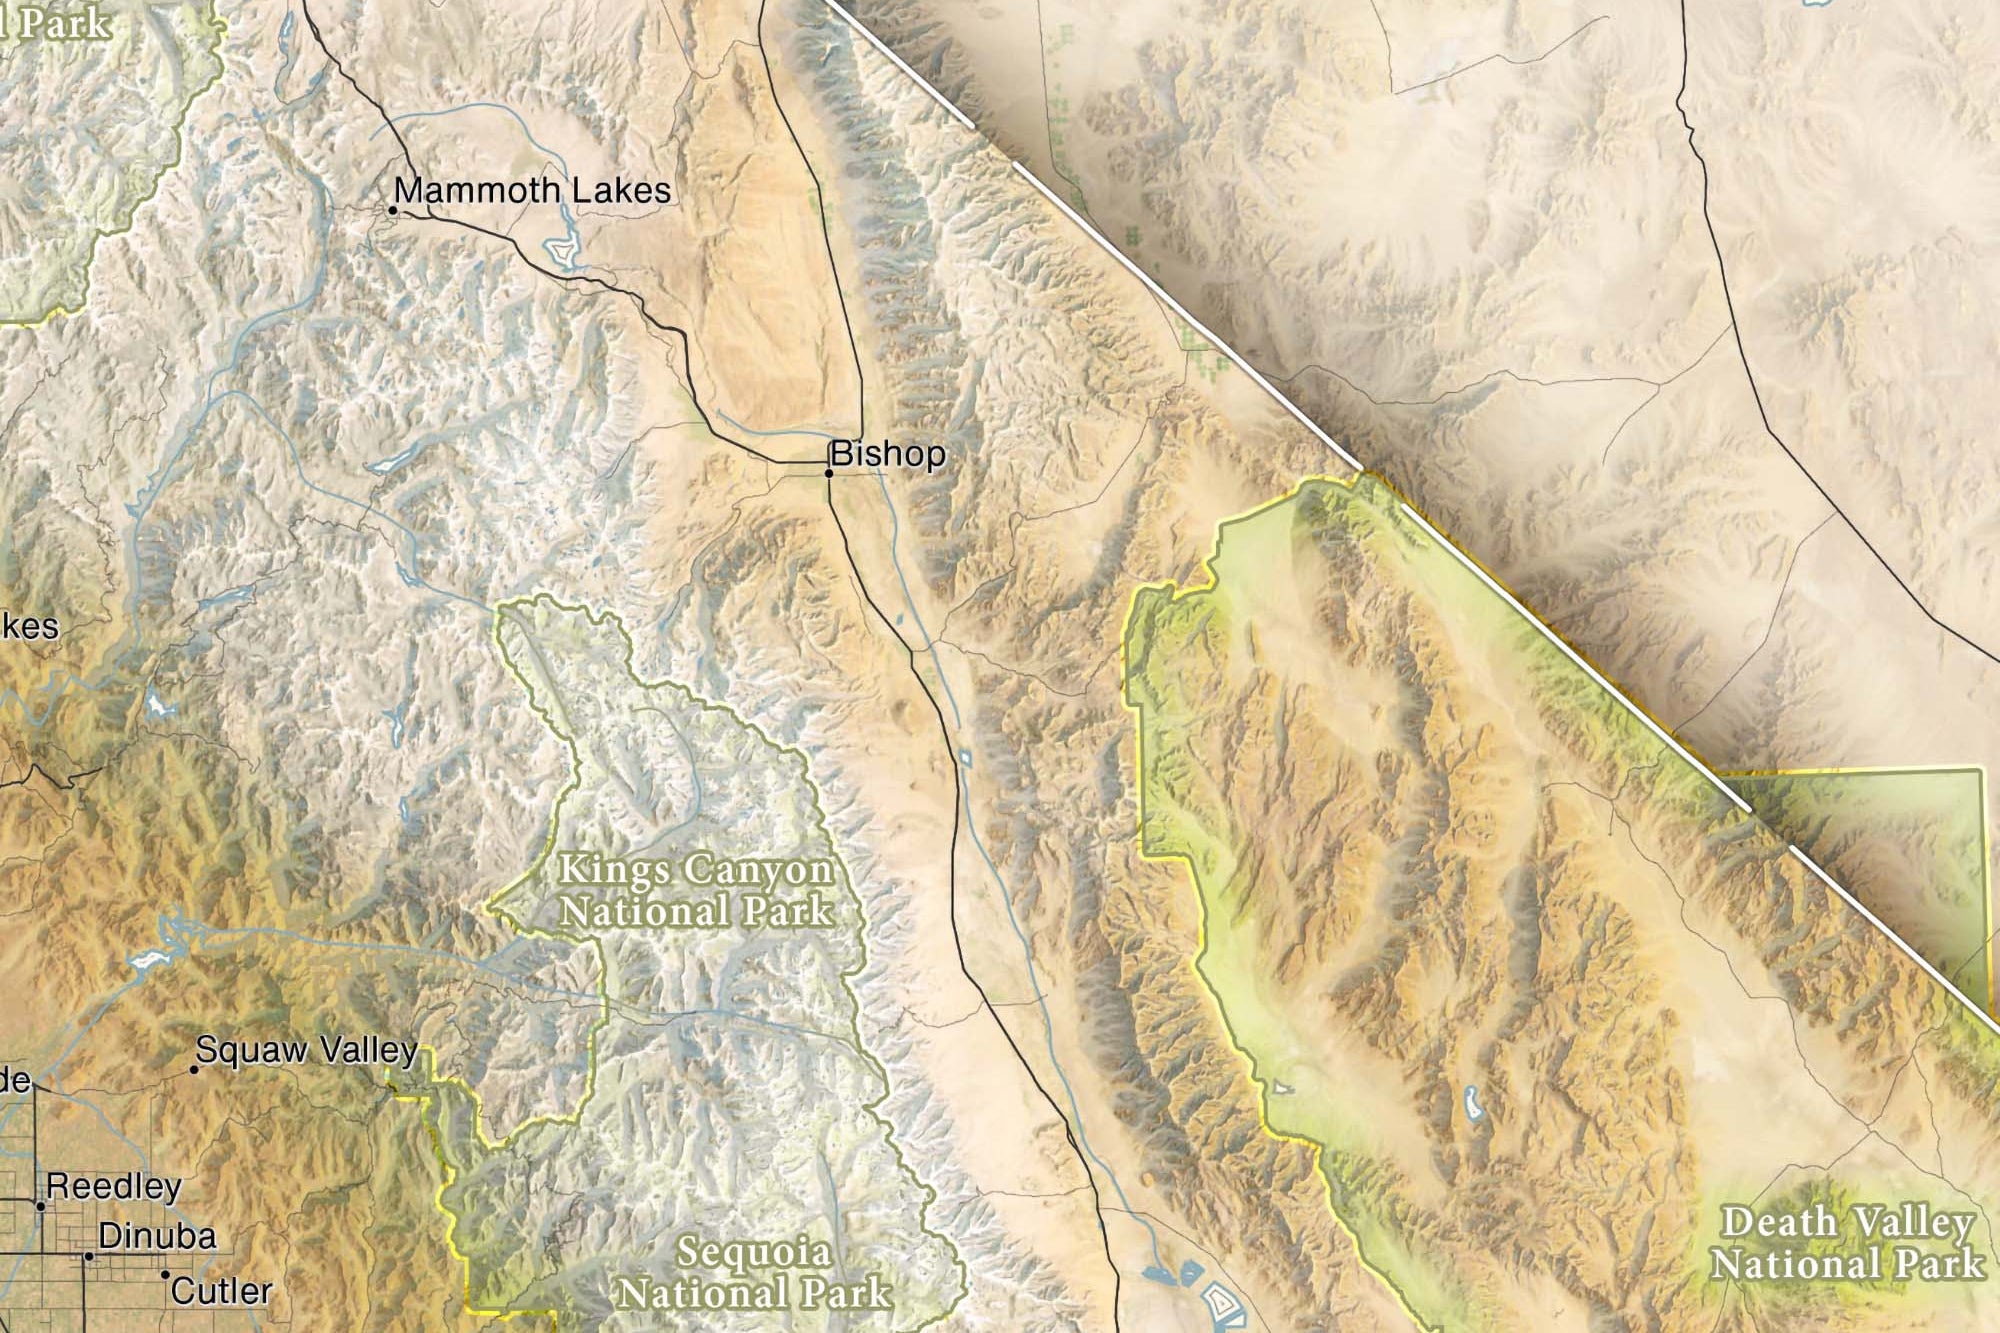 Detailed map of california wall art